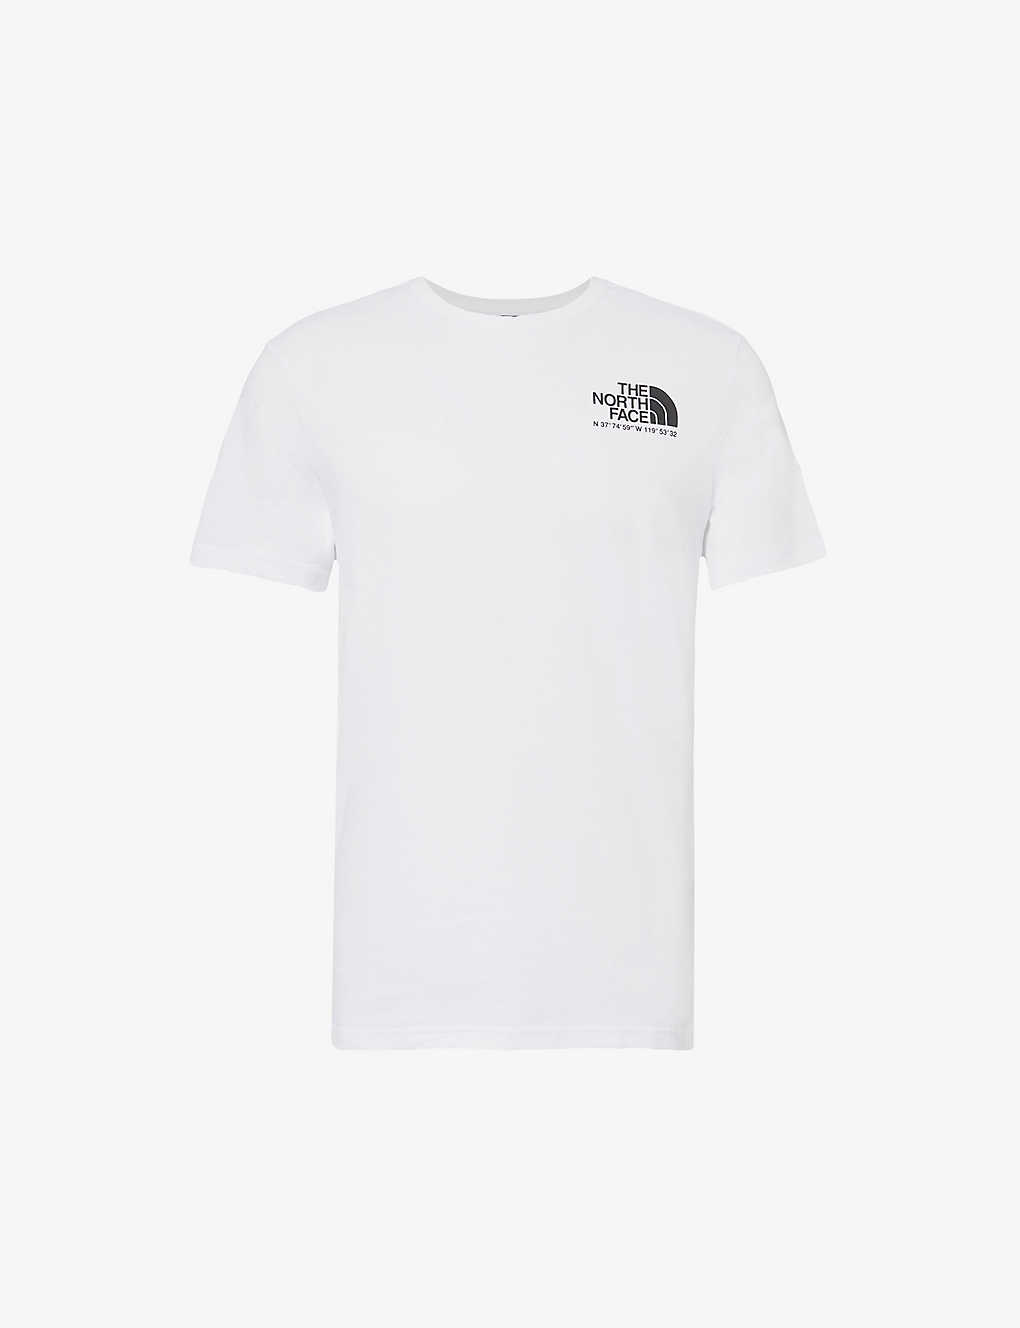 Shop The North Face Men's White Coordinates Graphic-print Cotton-jersey T-shirt